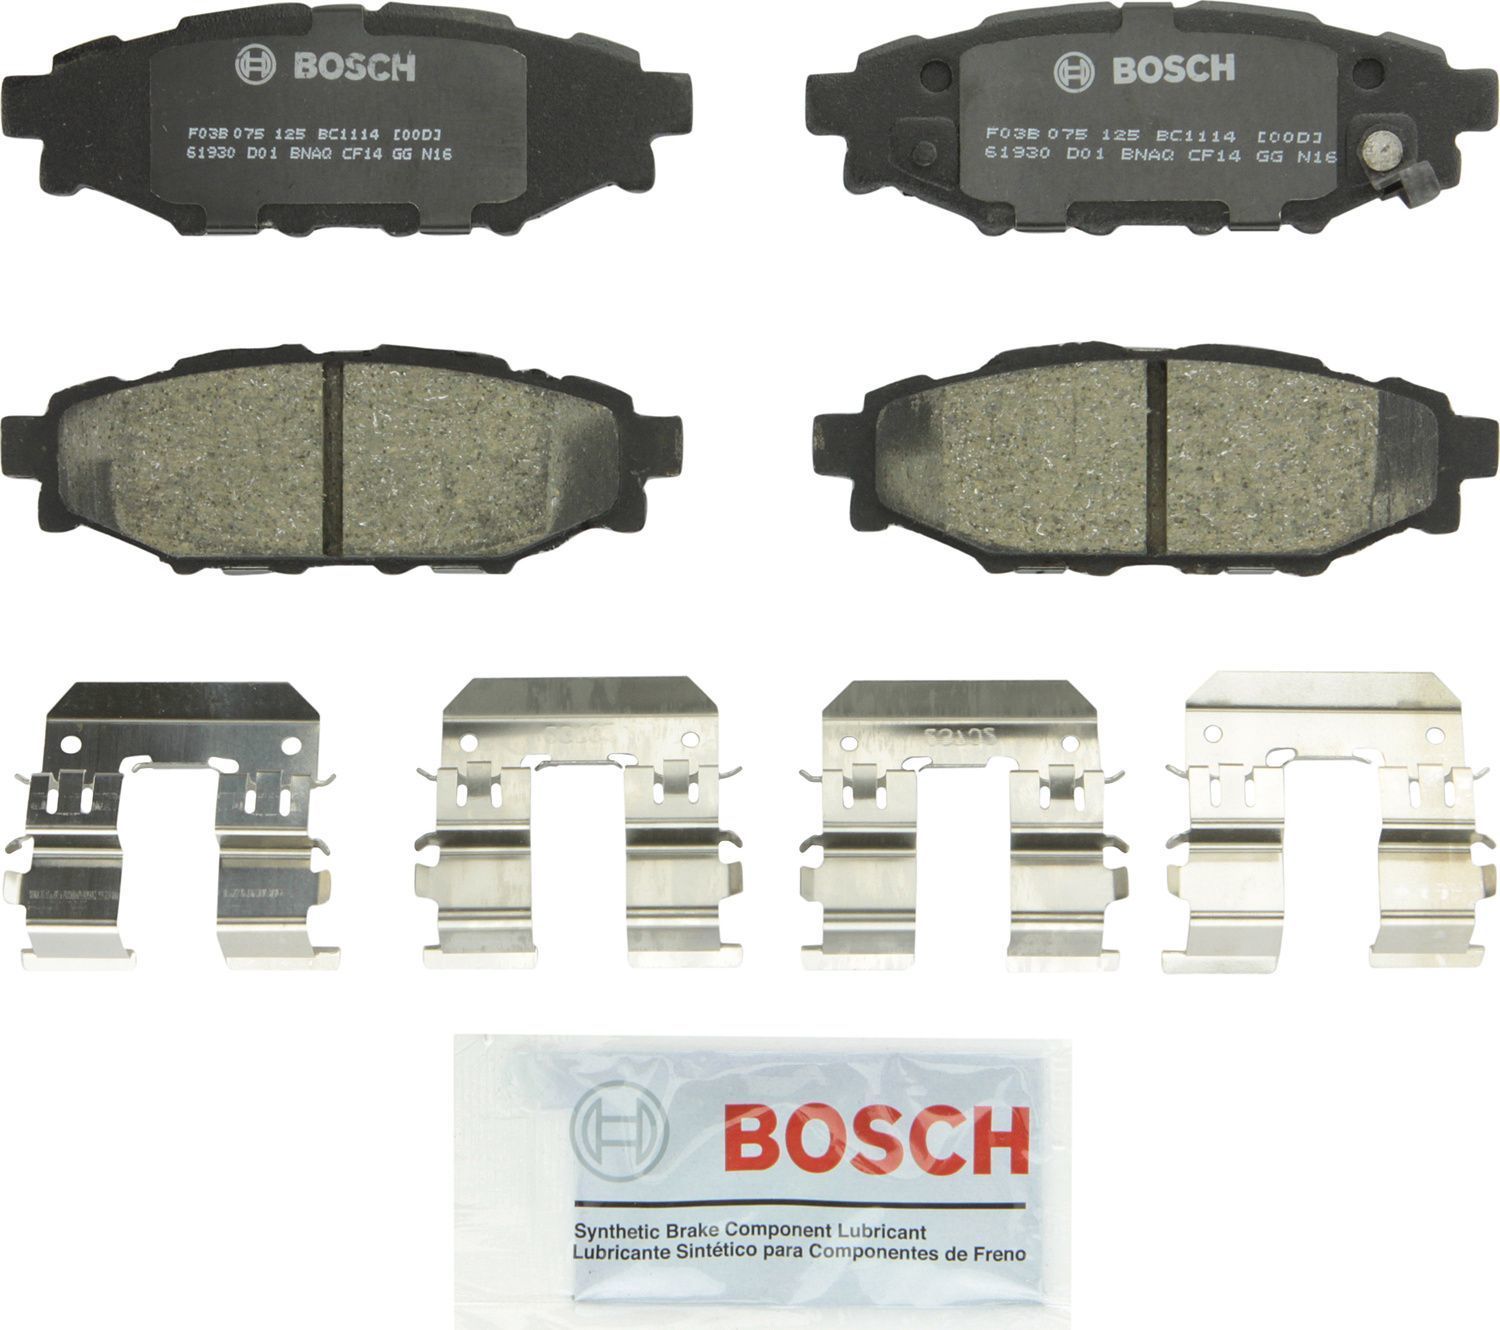 BOSCH BRAKE - Bosch QuietCast Brake Pad Ceramic Brake Pads (Rear) - BQC BC1114